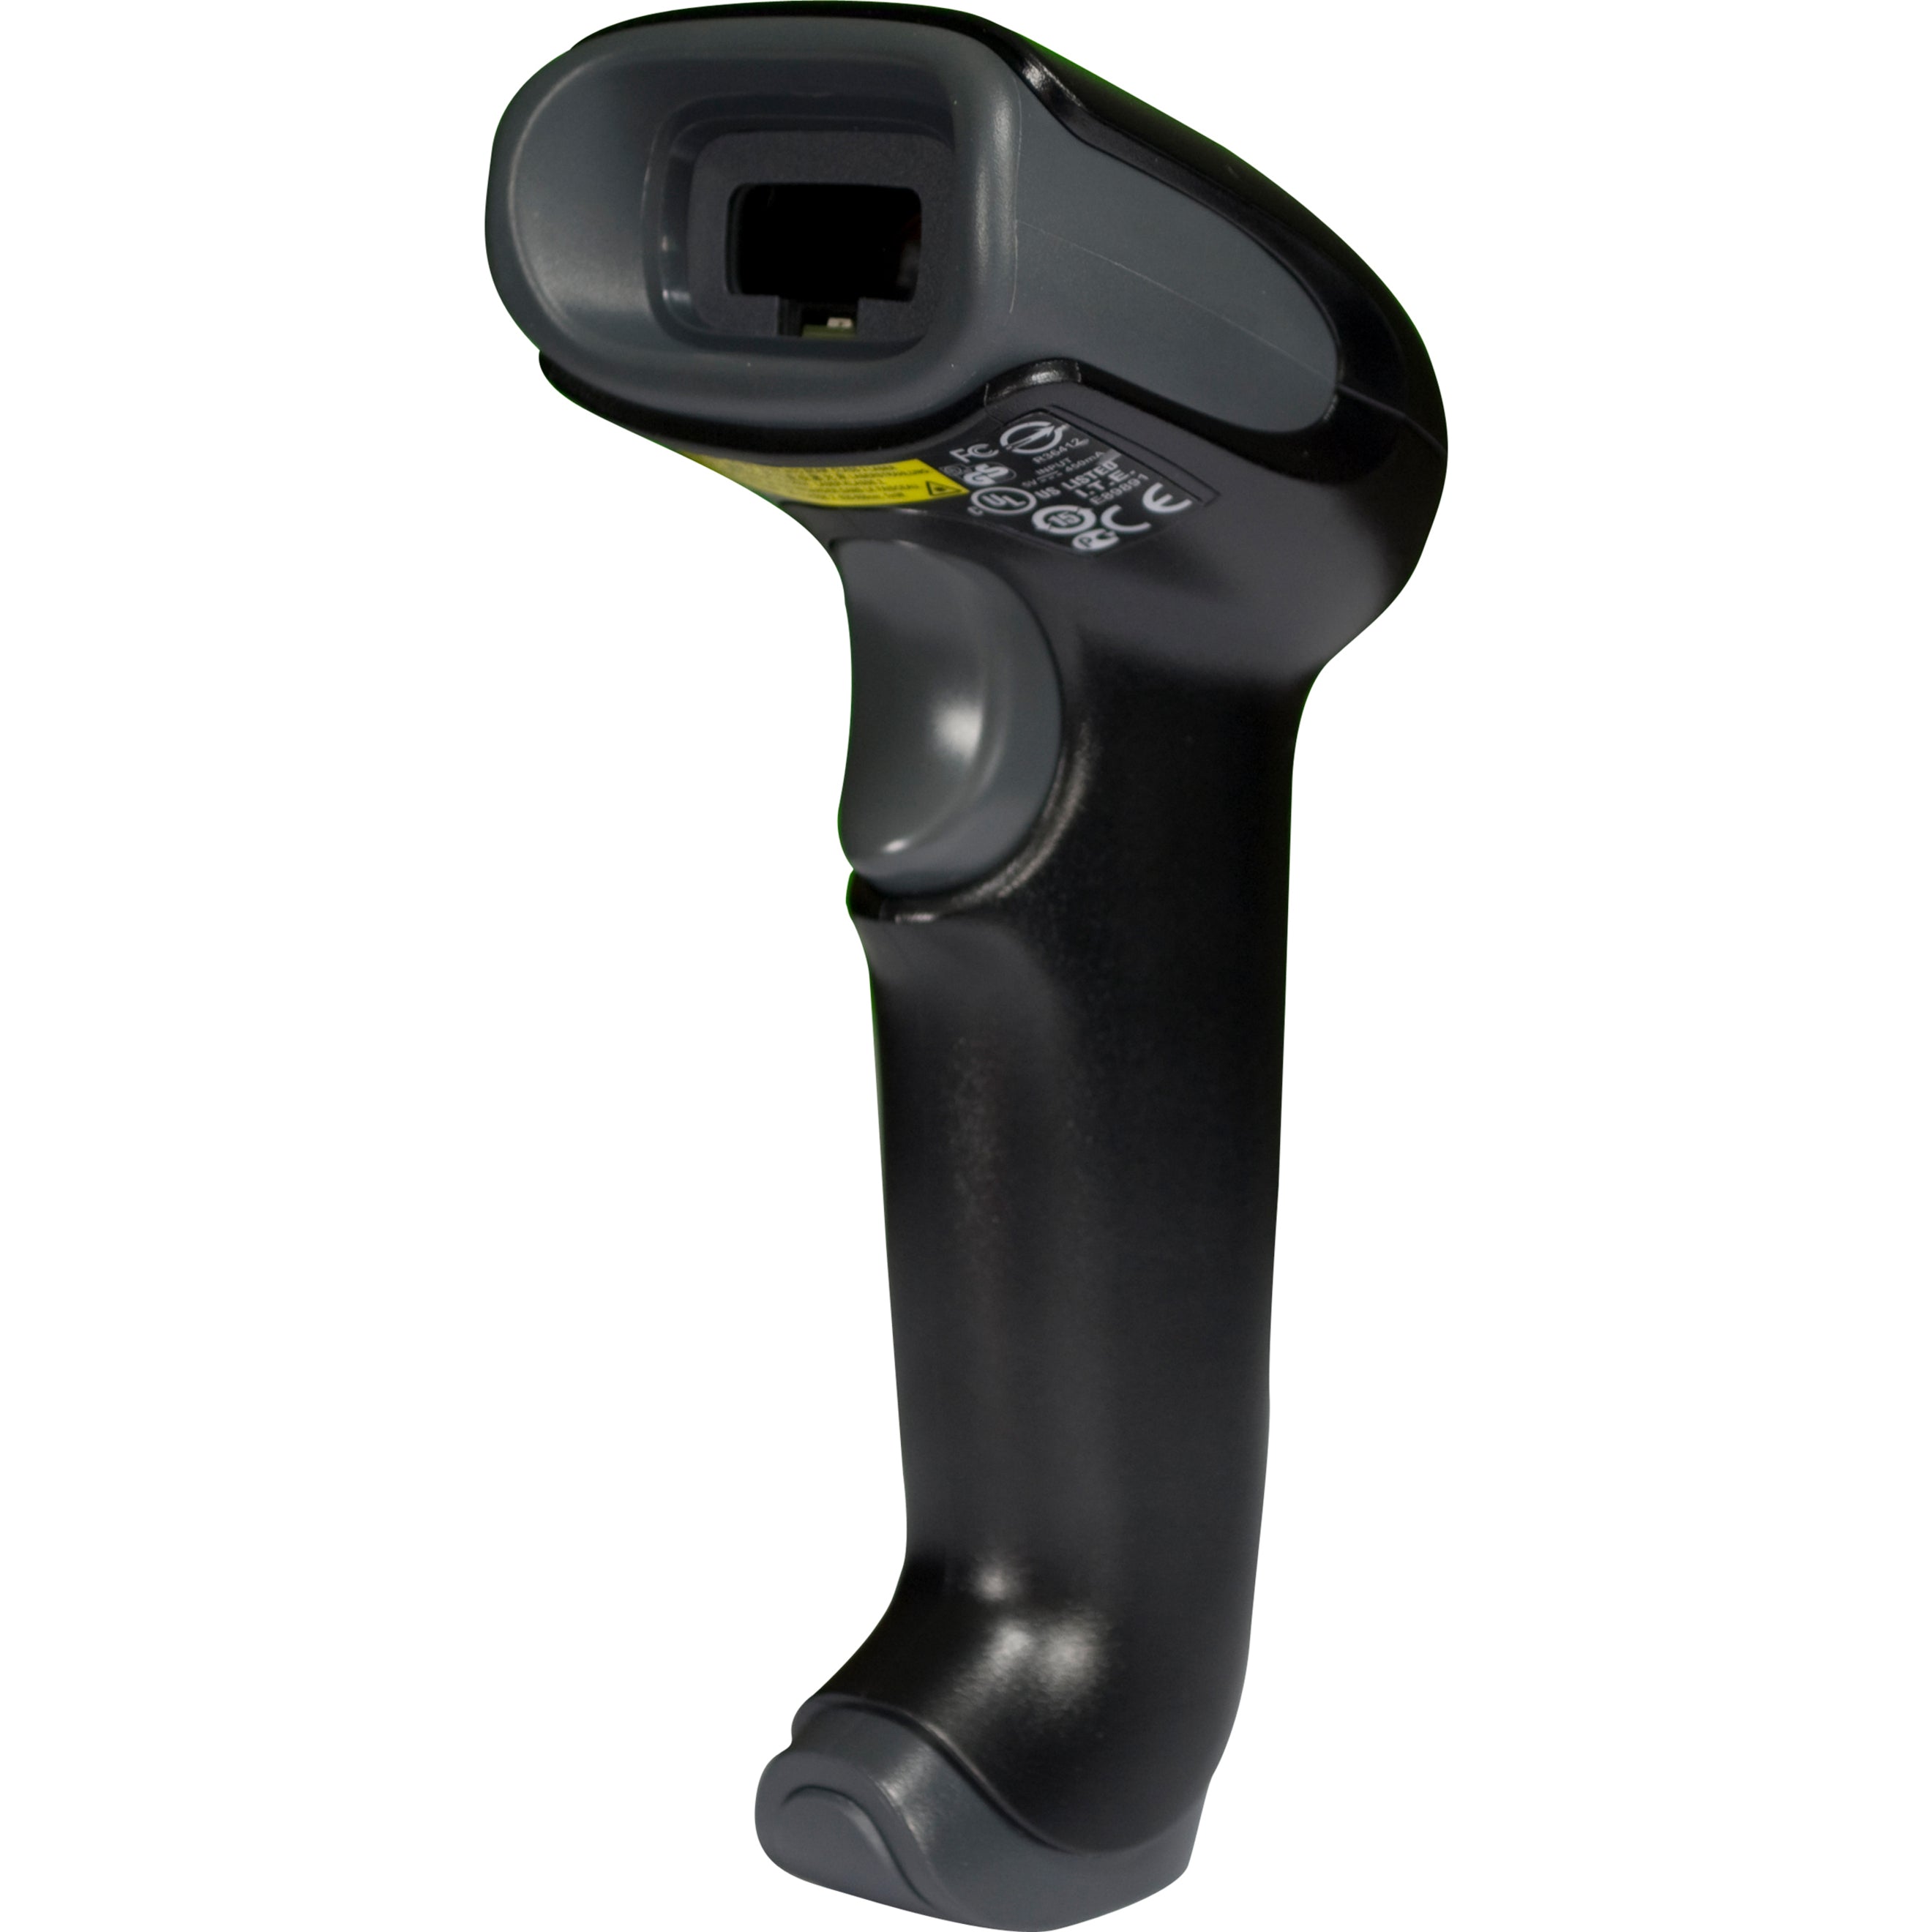 Honeywell 1250G-2 Voyager 1250g Handheld Bar Code Reader, Laser Scanner, 1D Scanning Capability